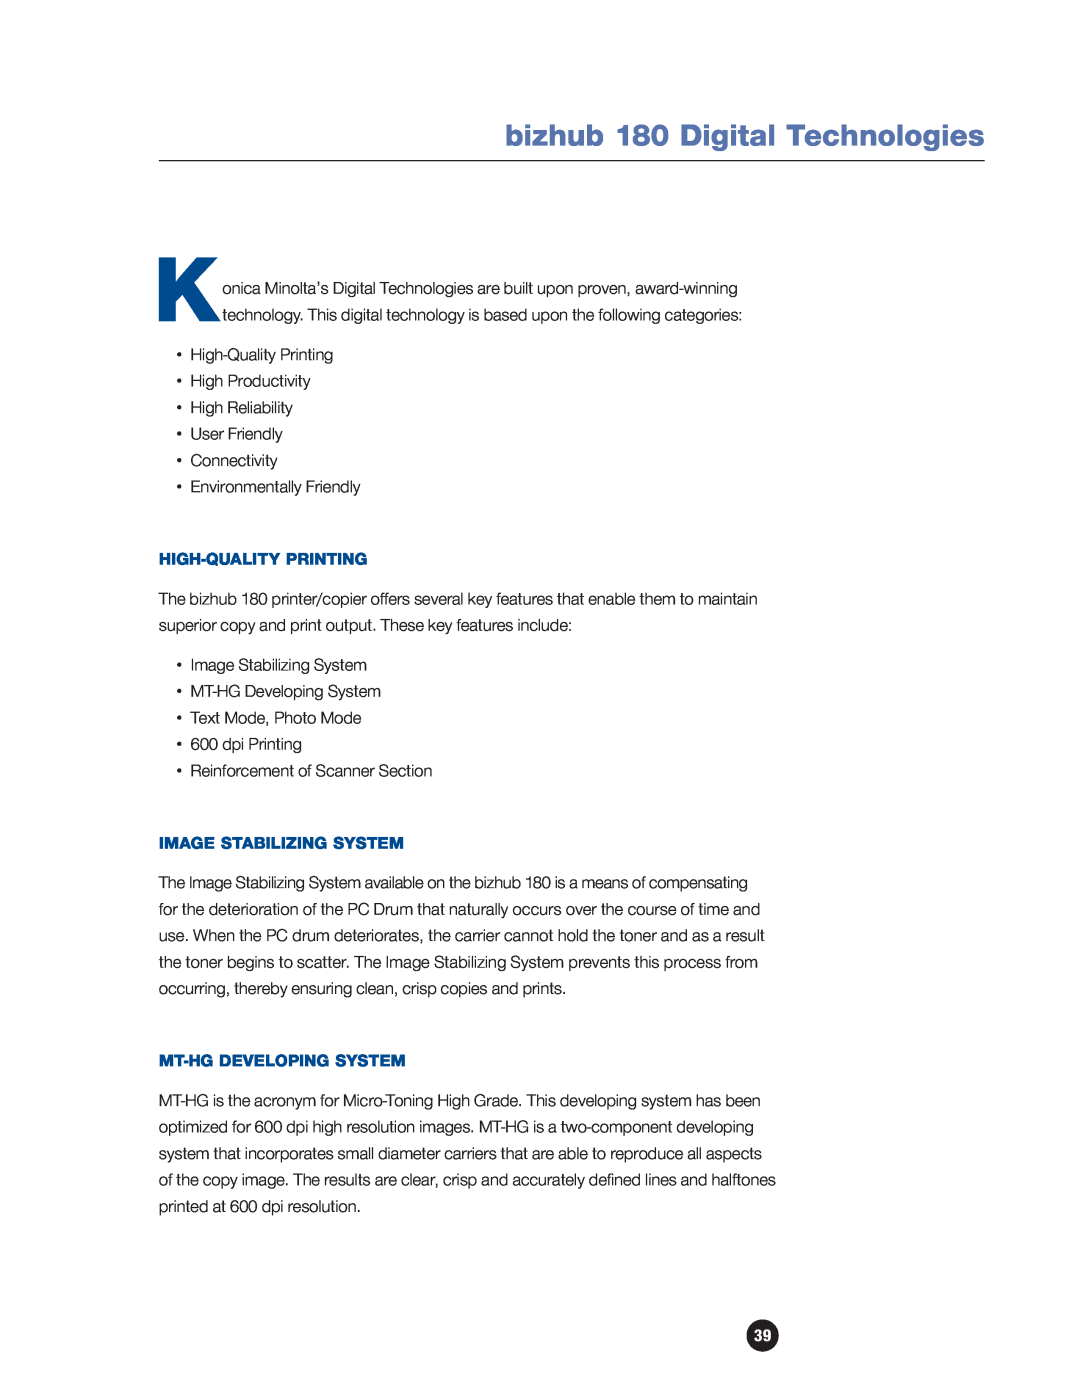 Konica Minolta manual bizhub 180 Digital Technologies, High-Quality Printing, Image Stabilizing System 